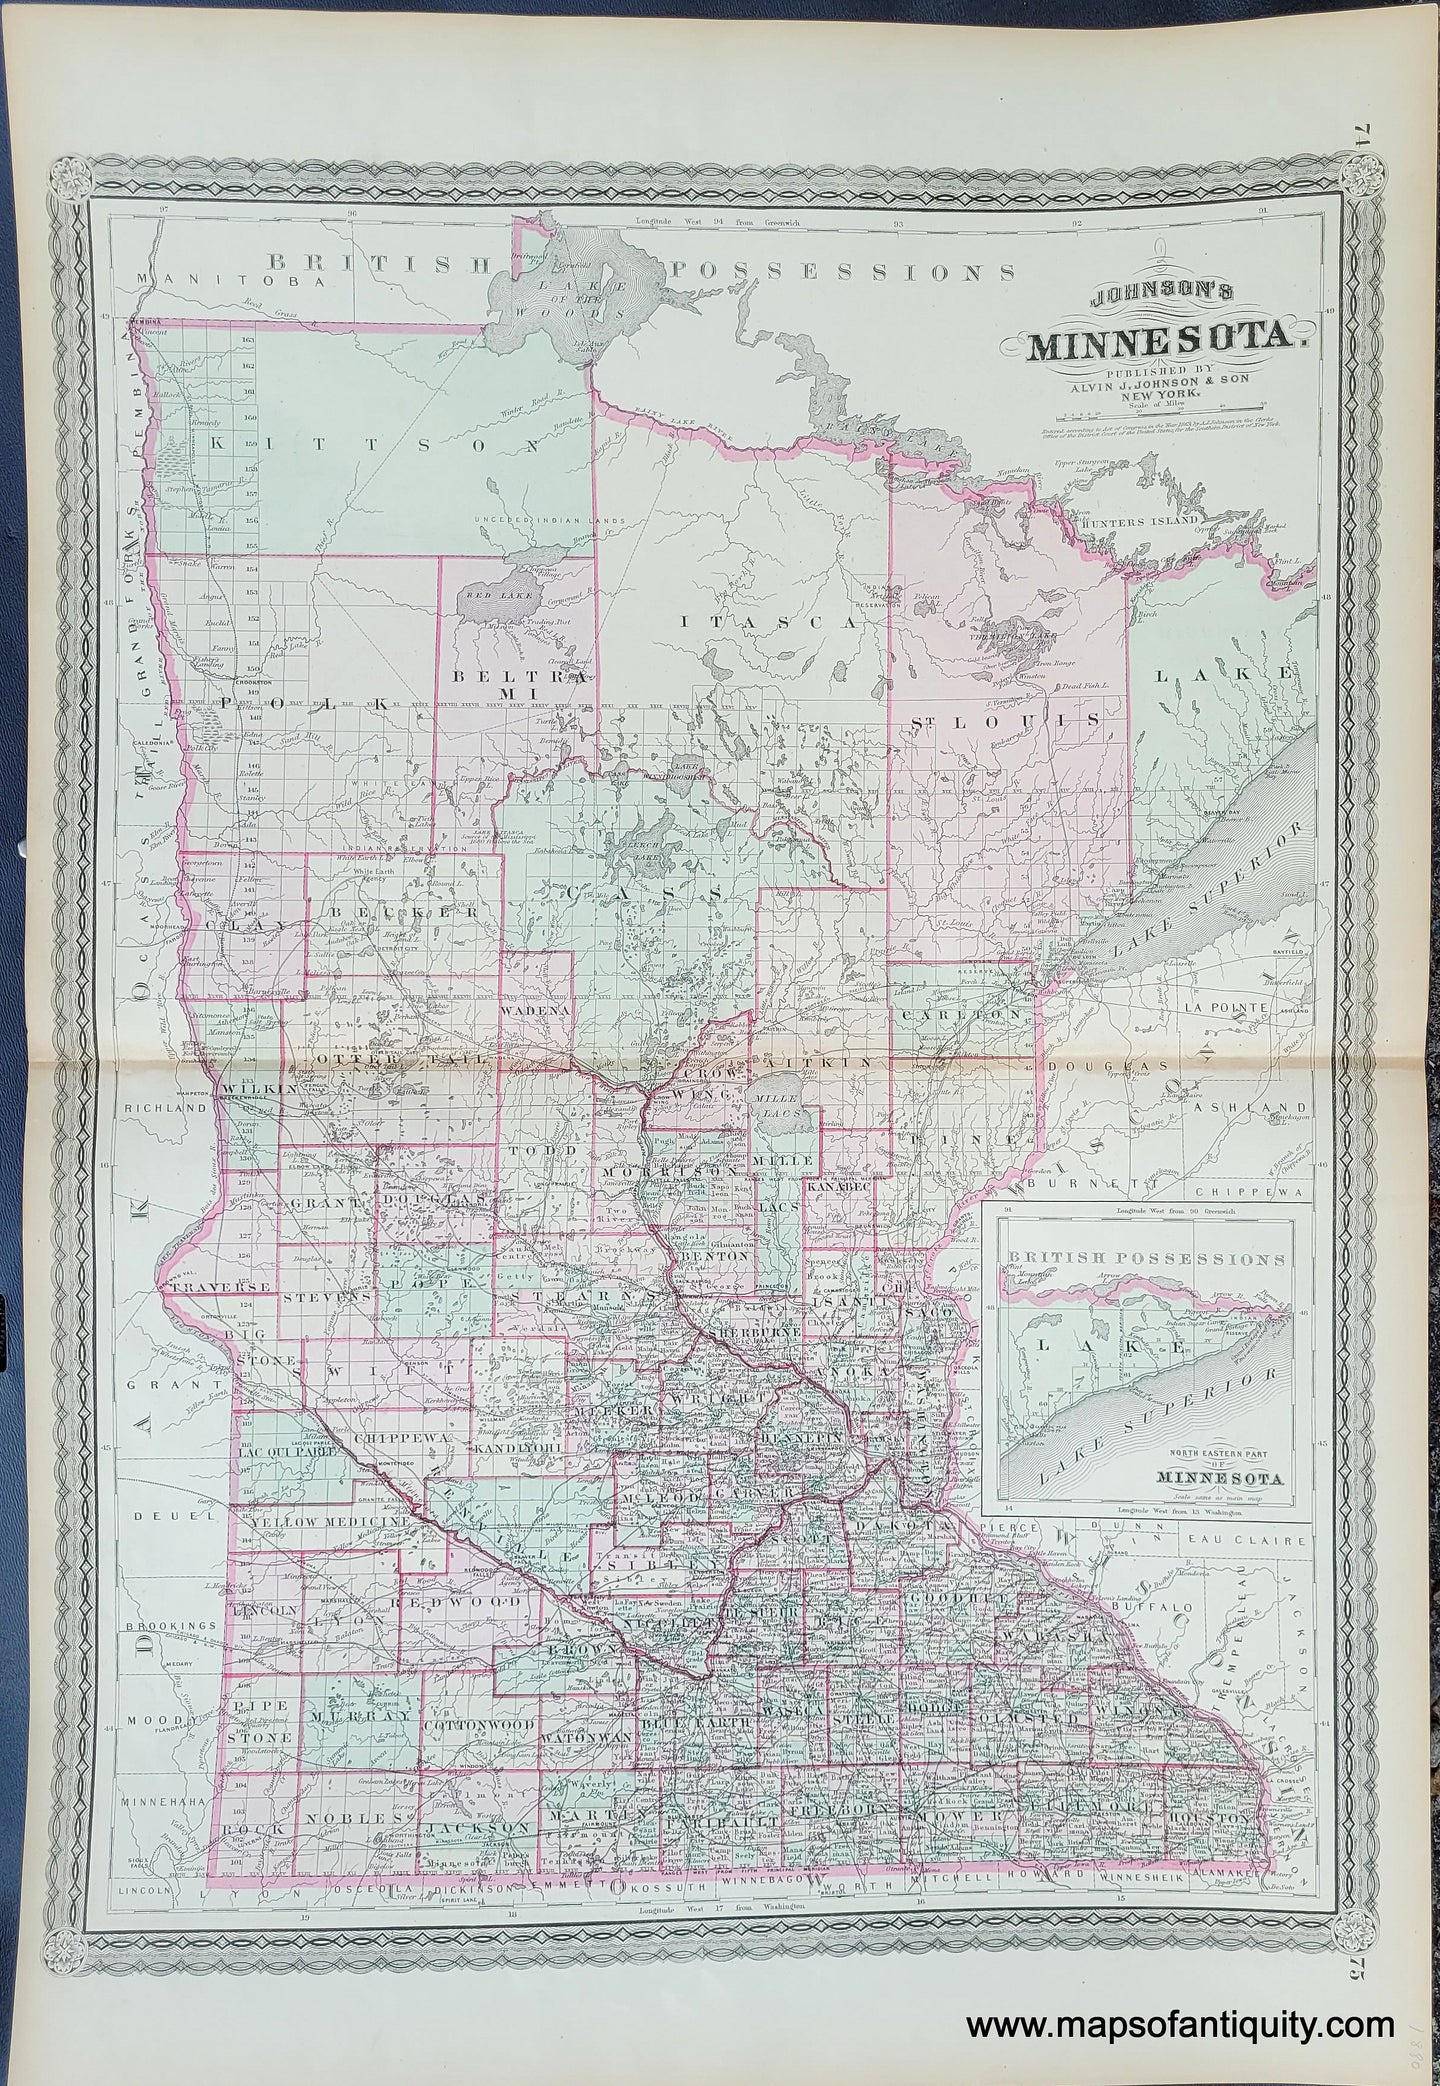 Antique-Hand-Colored-Map-Johnson's-Minnesota-1880-Johnson-Mid-West-Minnesota-1800s-19th-century-Maps-of-Antiquity